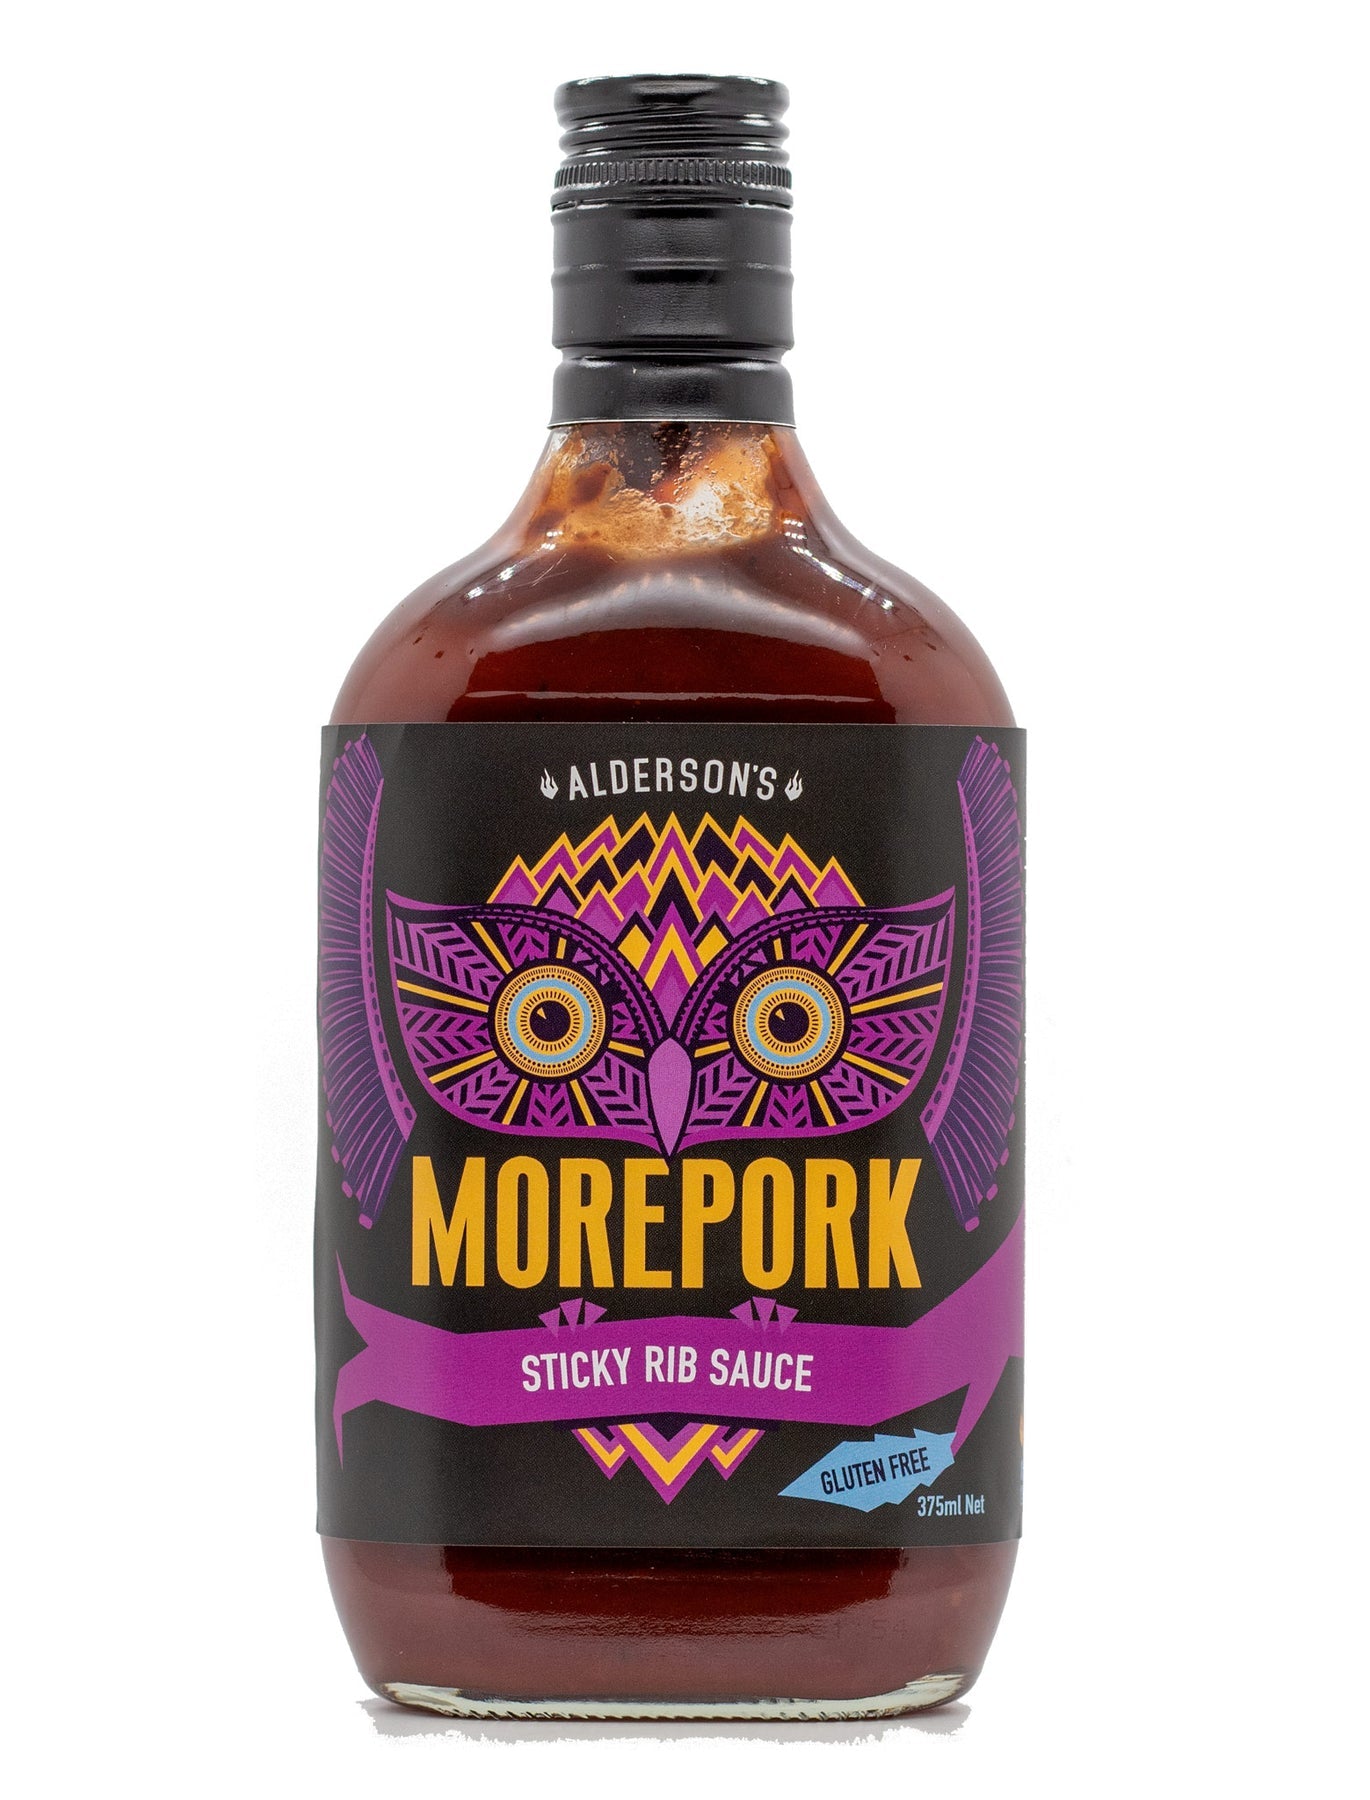 Alderson's Morepork Rib Sauce